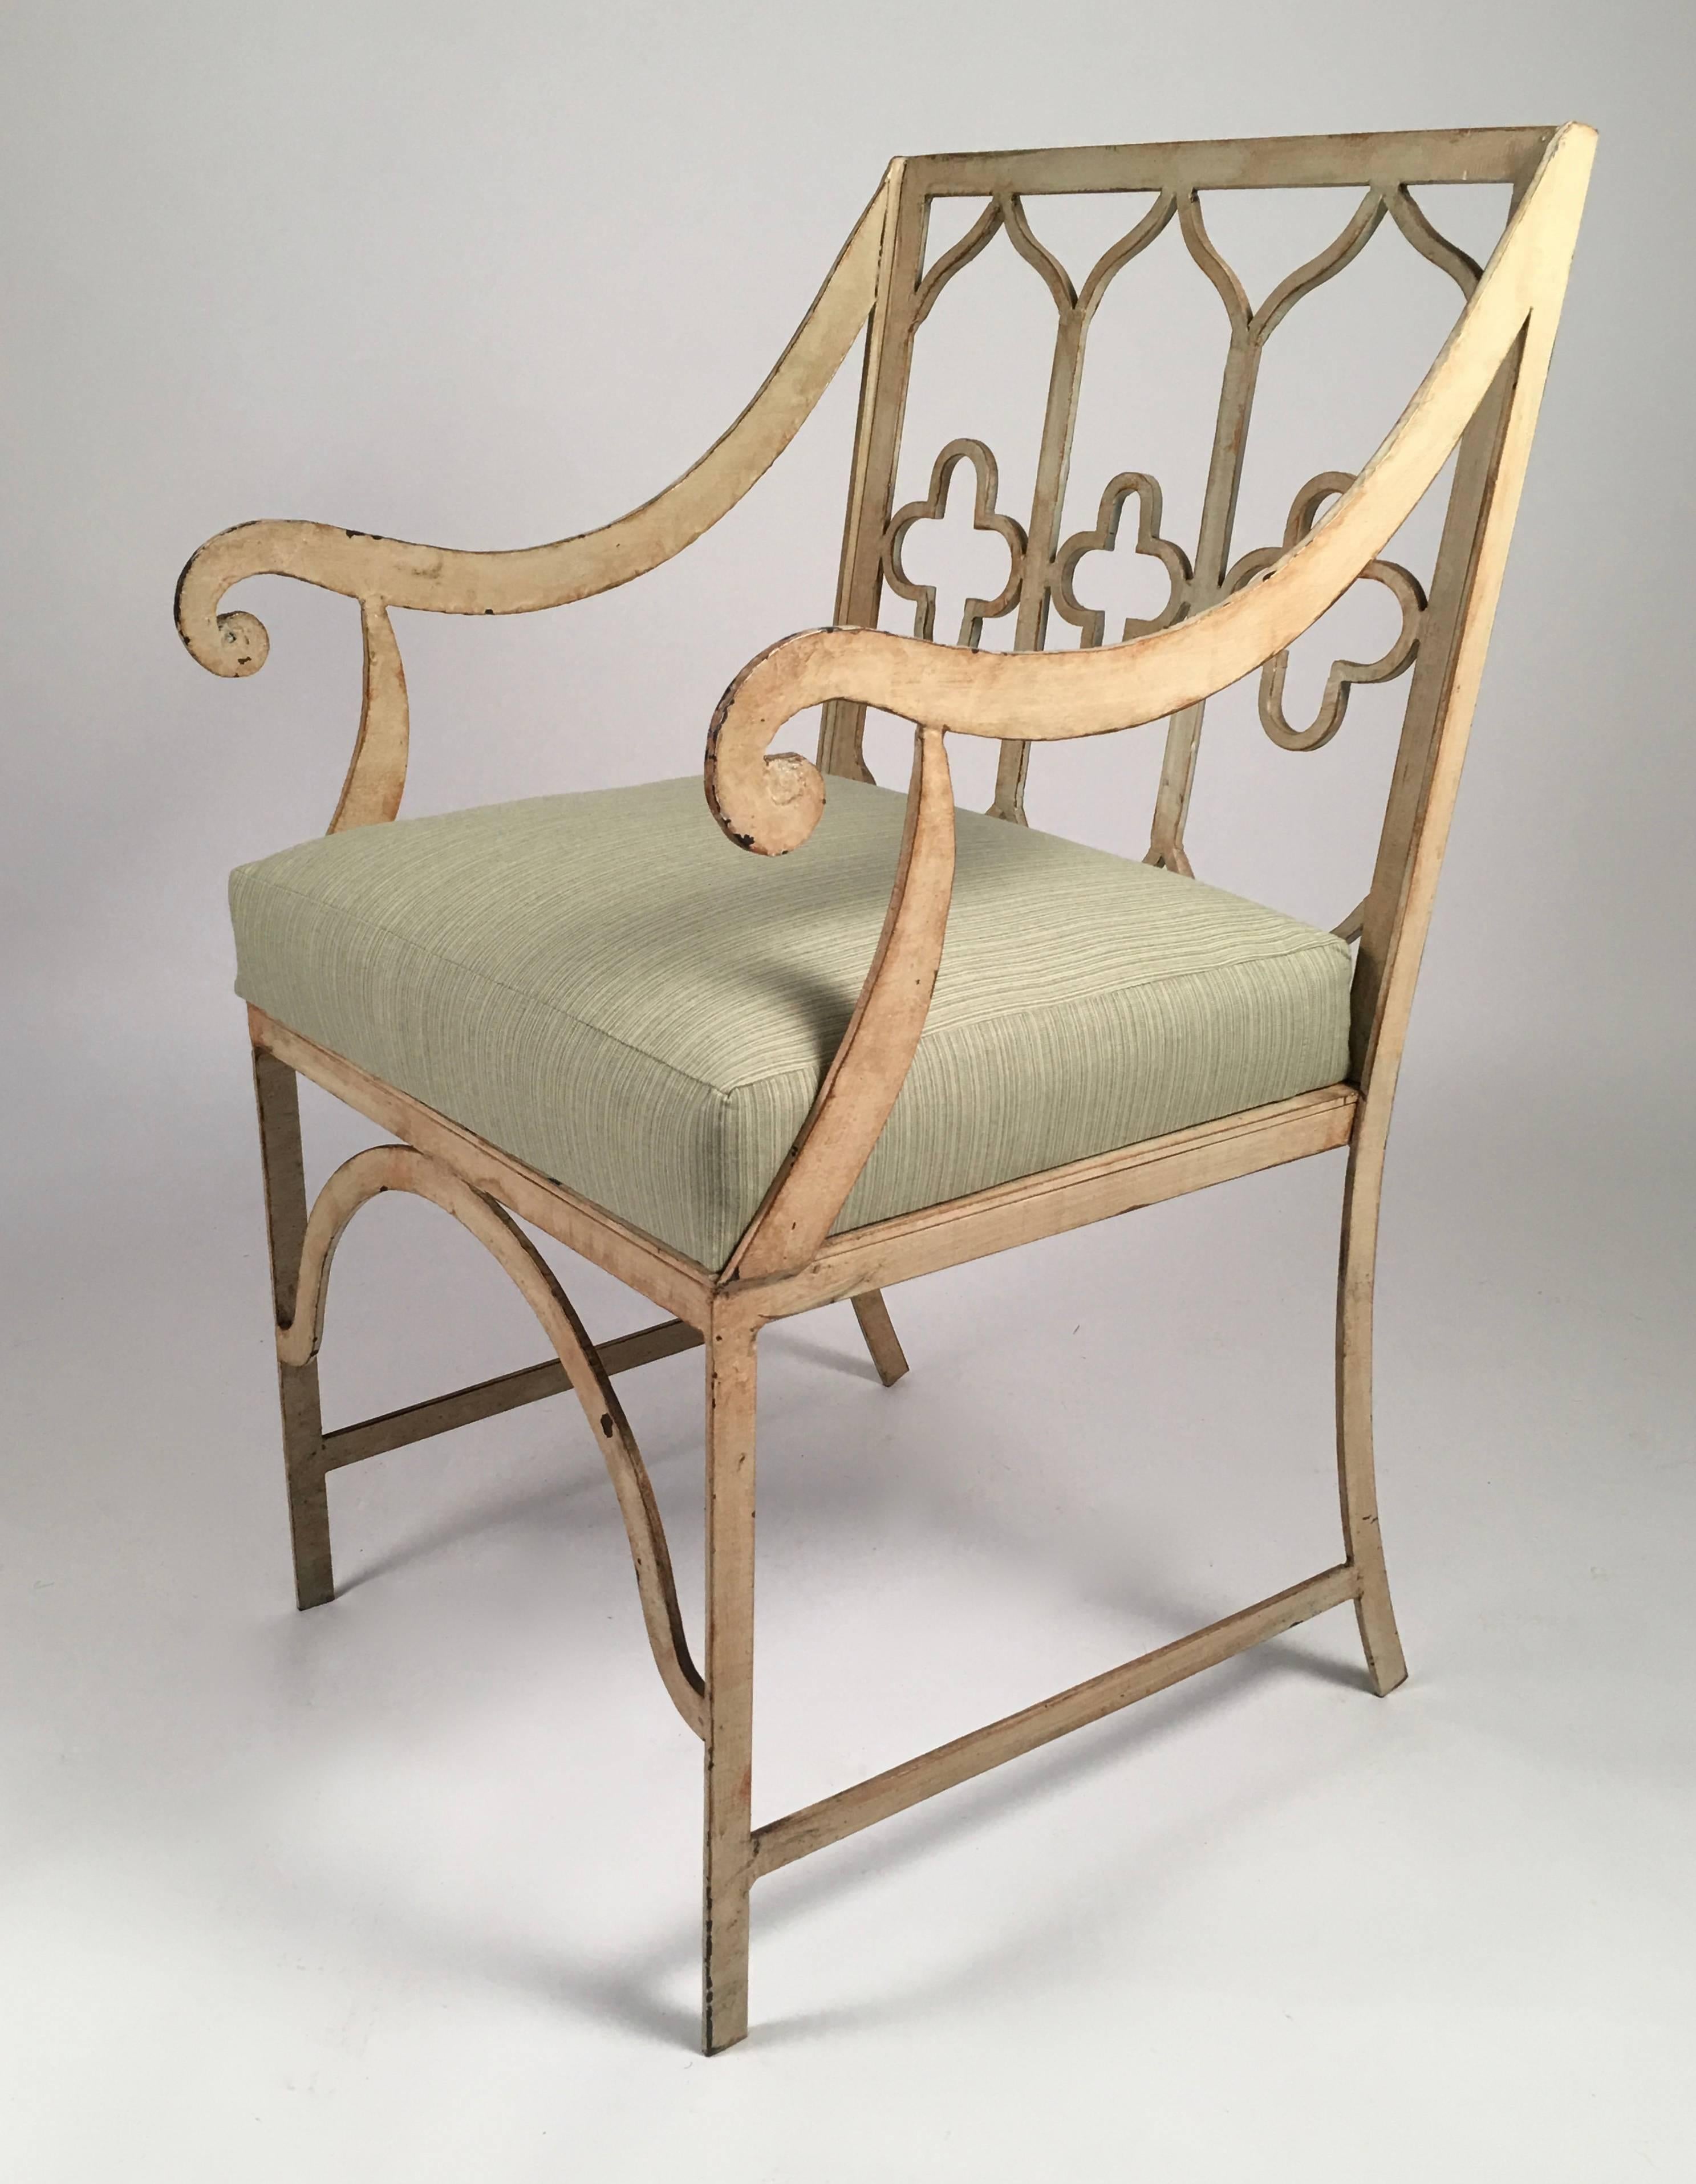 American Gothic Revival Iron Garden Chair